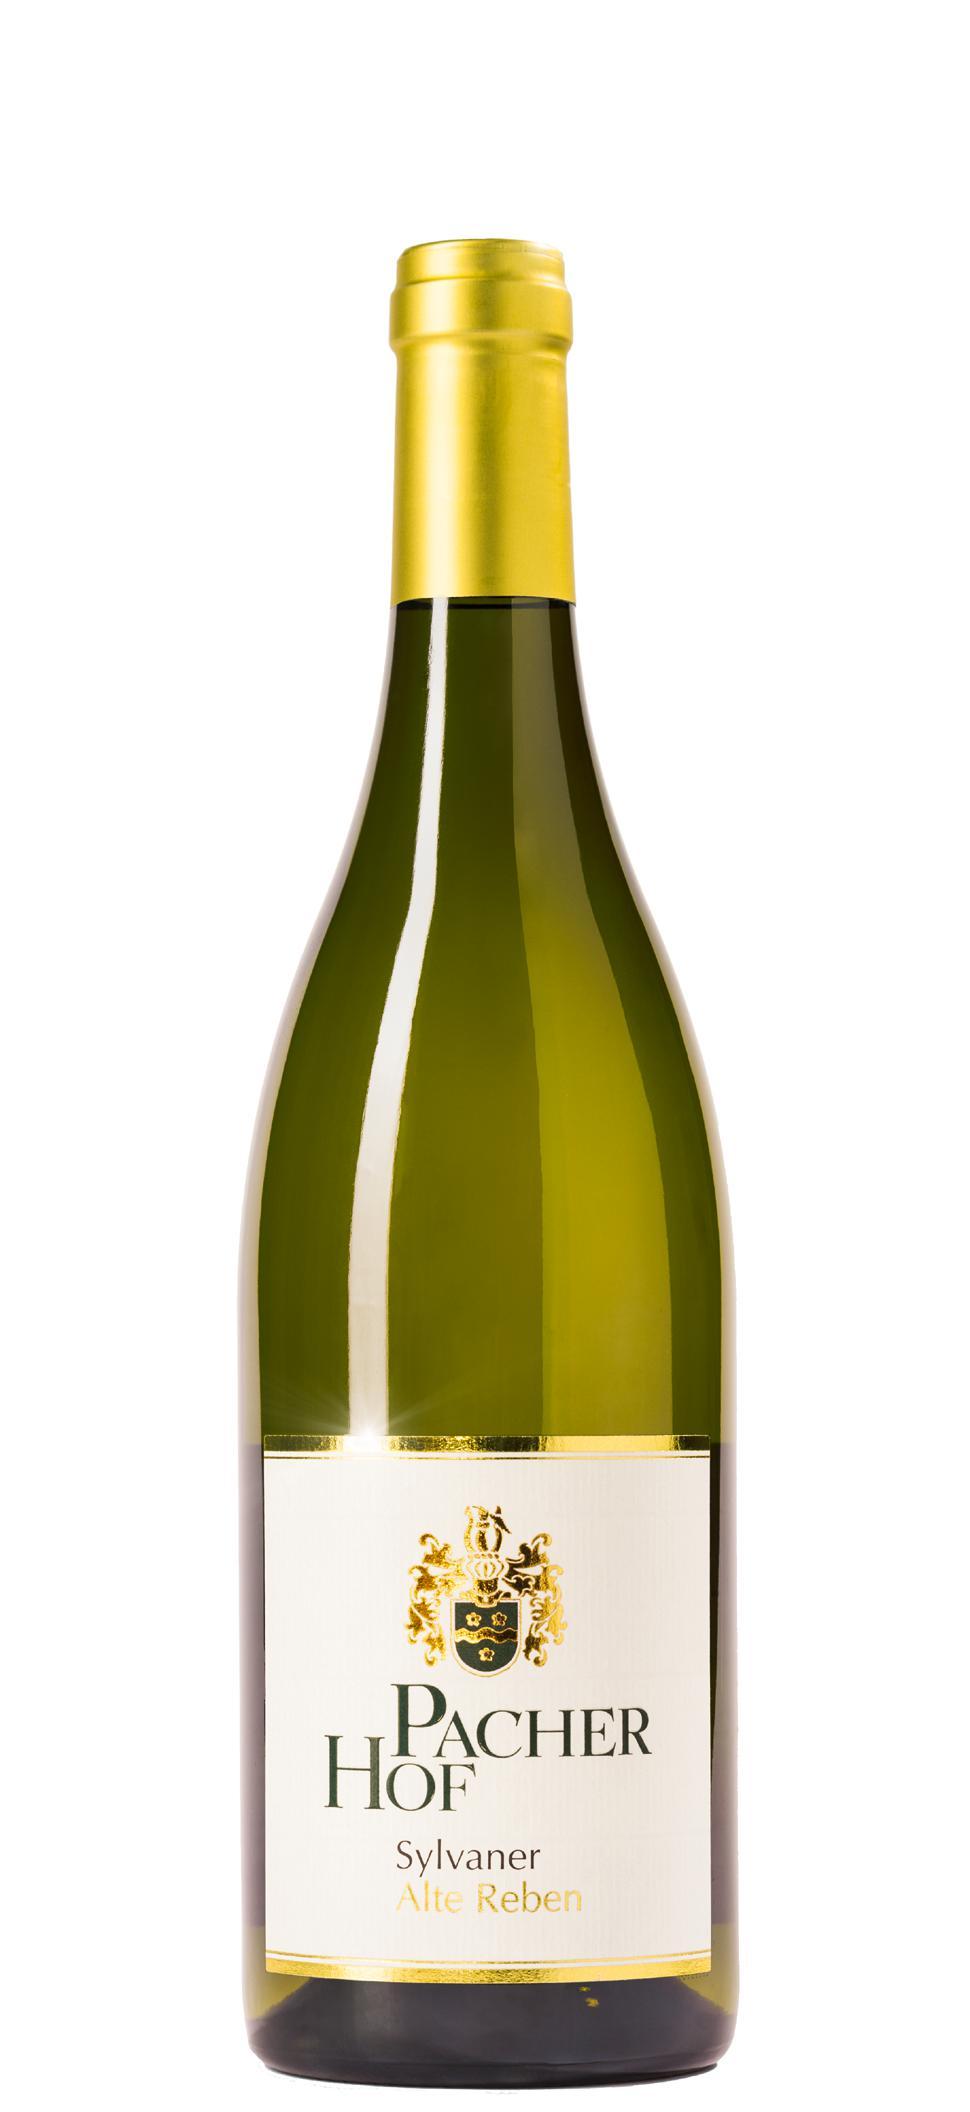 Sylvaner Vigne Vecchie 2015 Grape variety: Sylvaner Altitude: 620-670 m Description: white wine with brilliant straw-yellow colour.